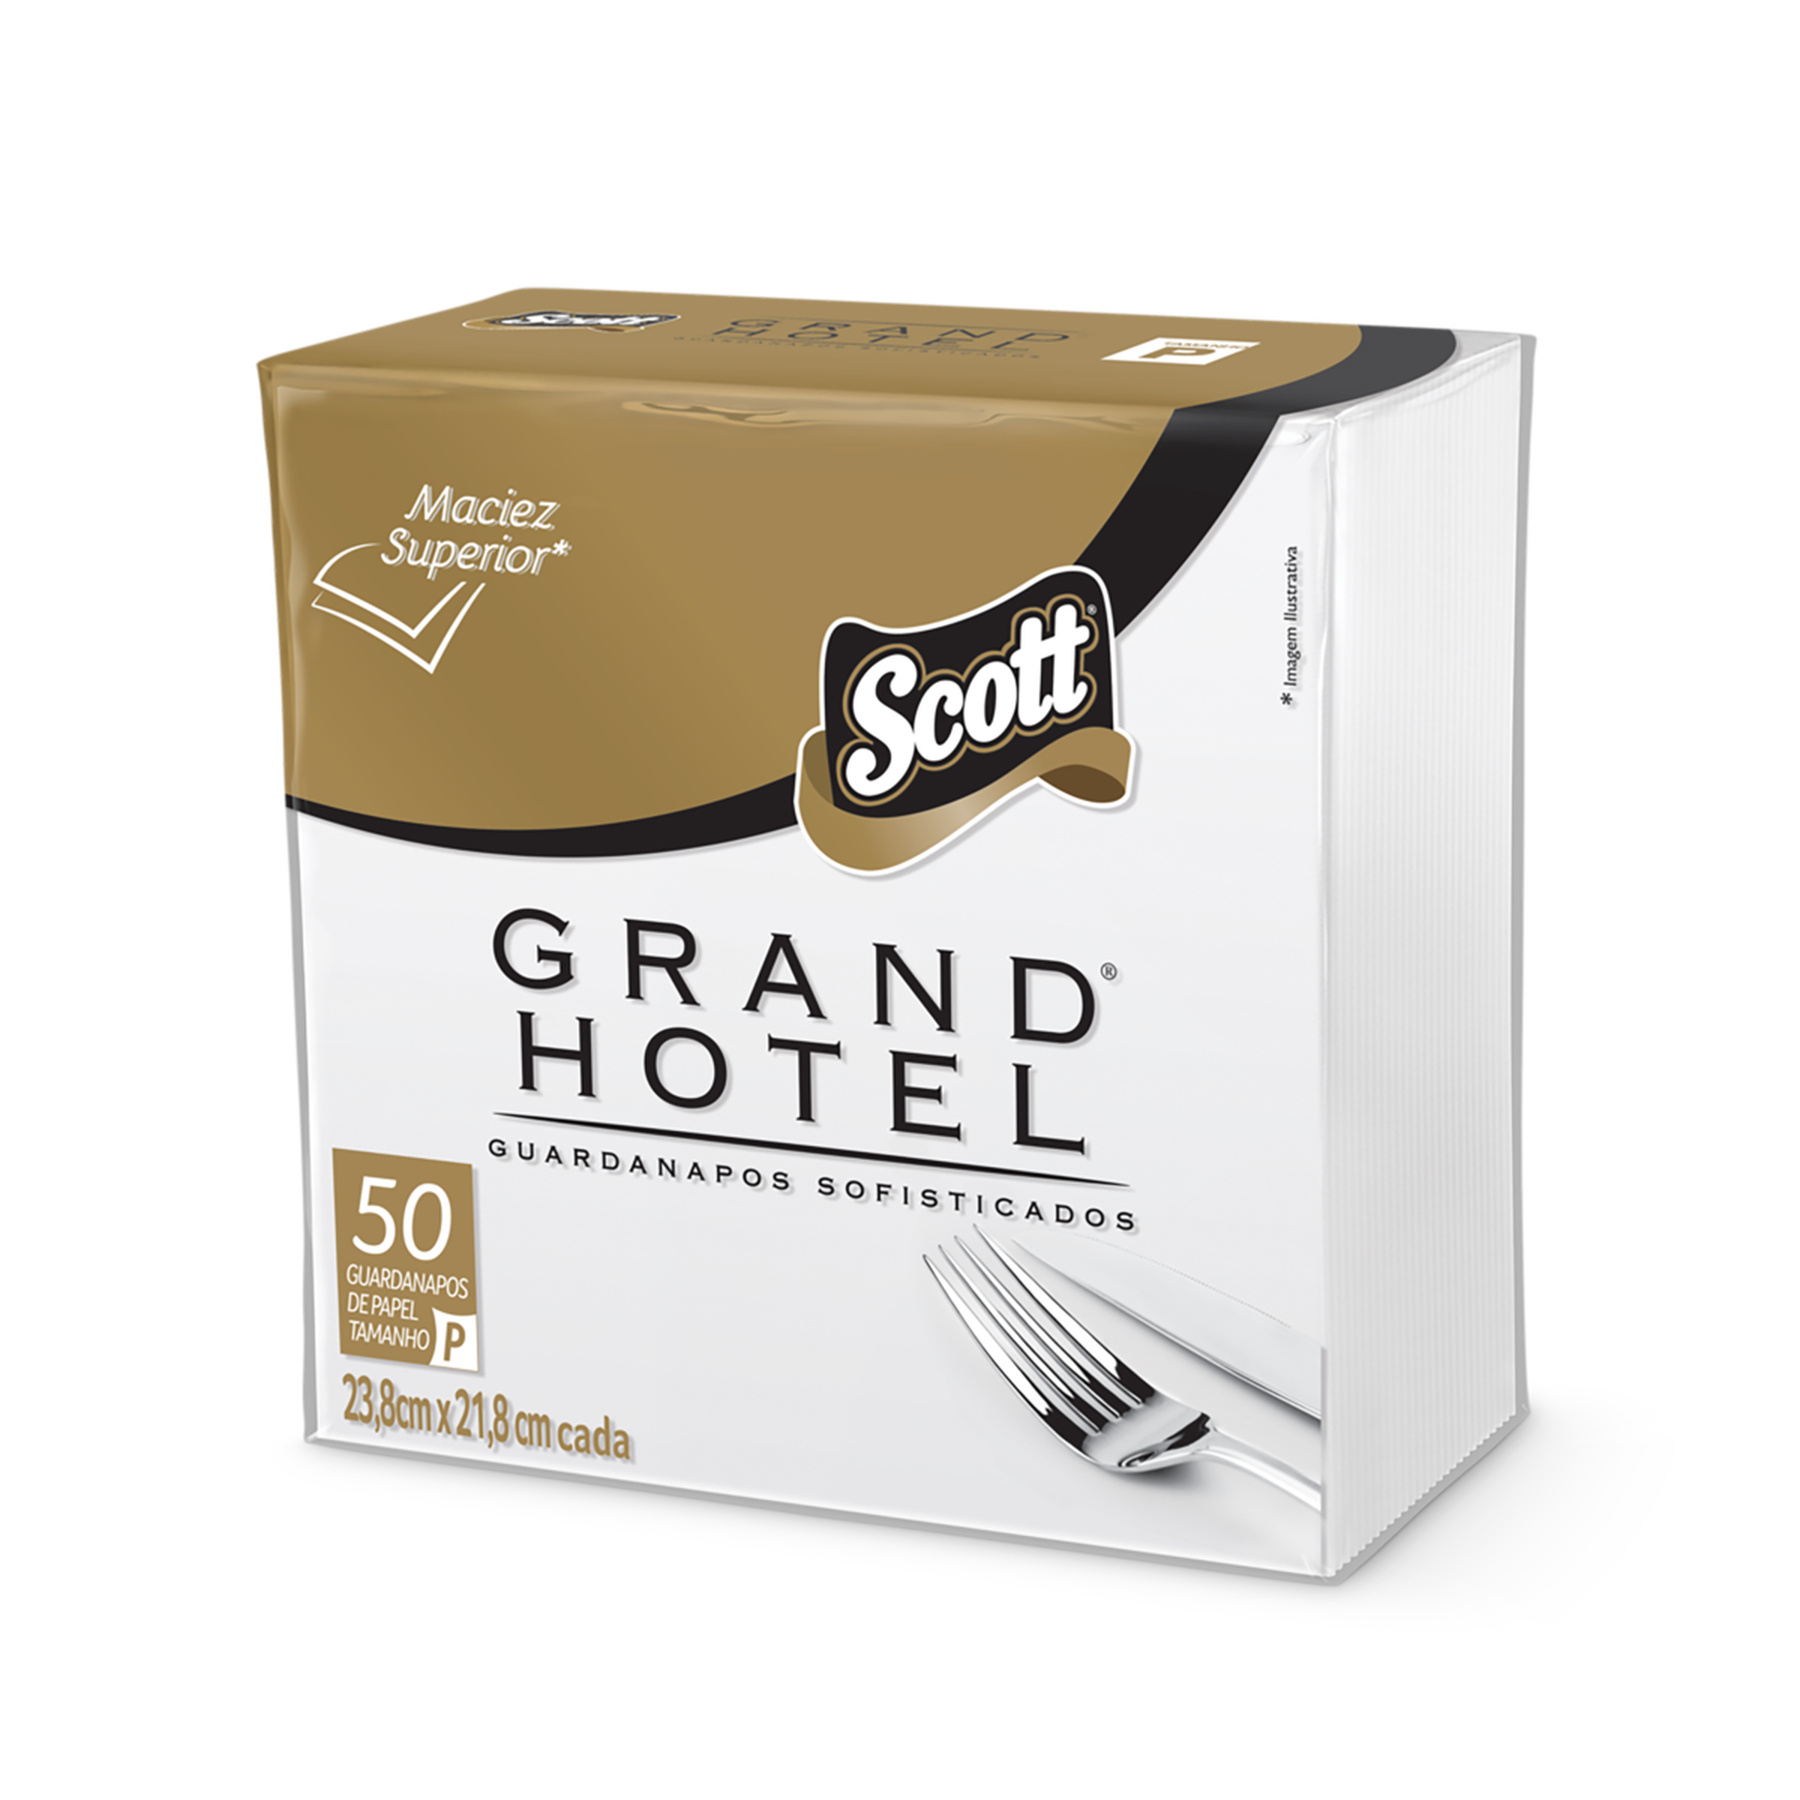 Guardanapo de Papel Folha Tripla Scott Grand Hotel 23,8cm x 21,8cm Pacote C/50 Unidades